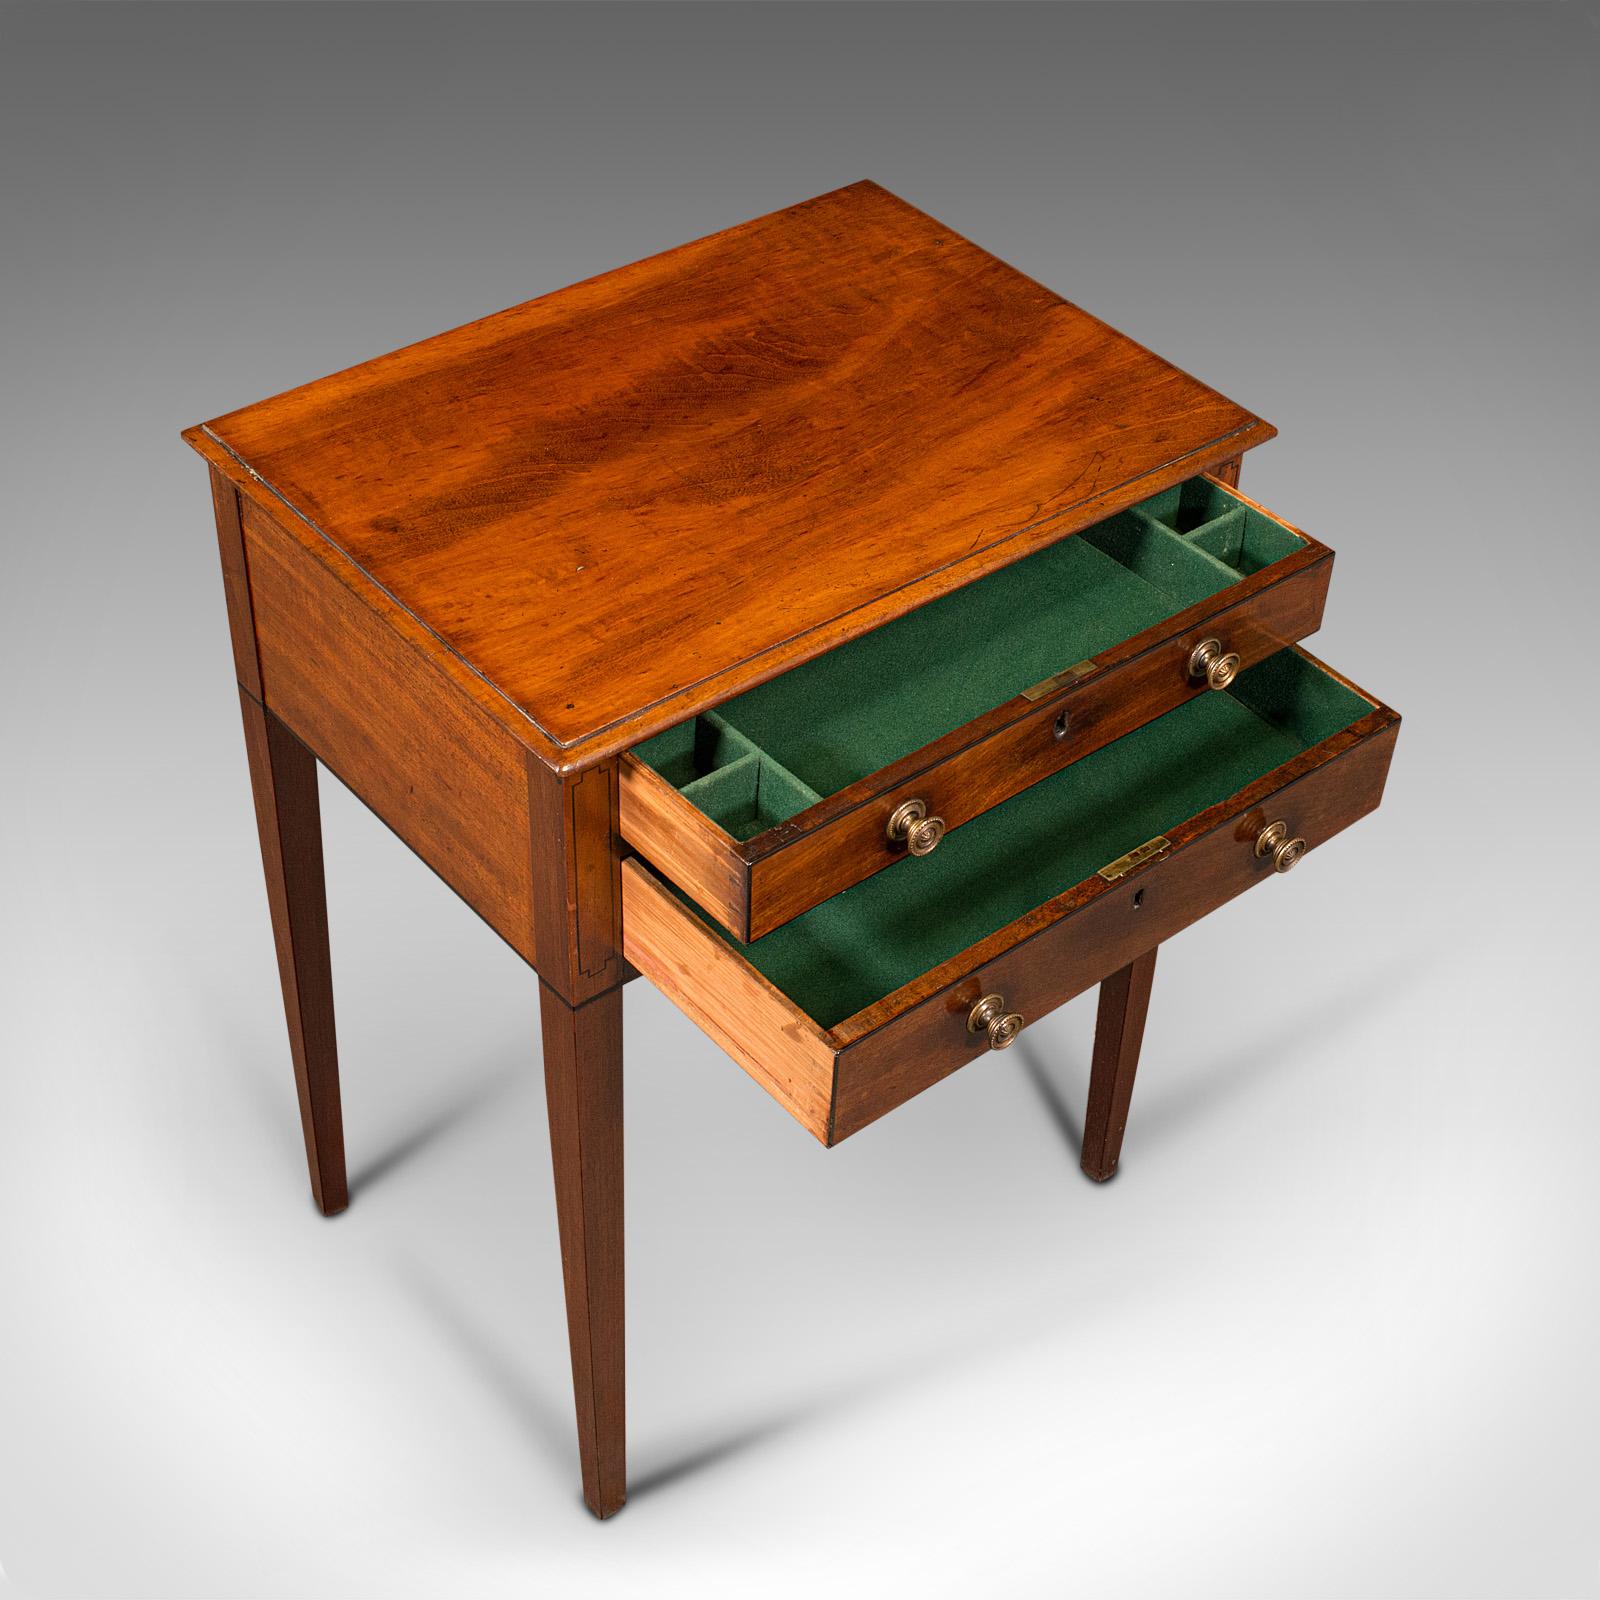 Small Antique Sewing Table, English, Bureau, Correspondence Desk, Georgian, 1800 1